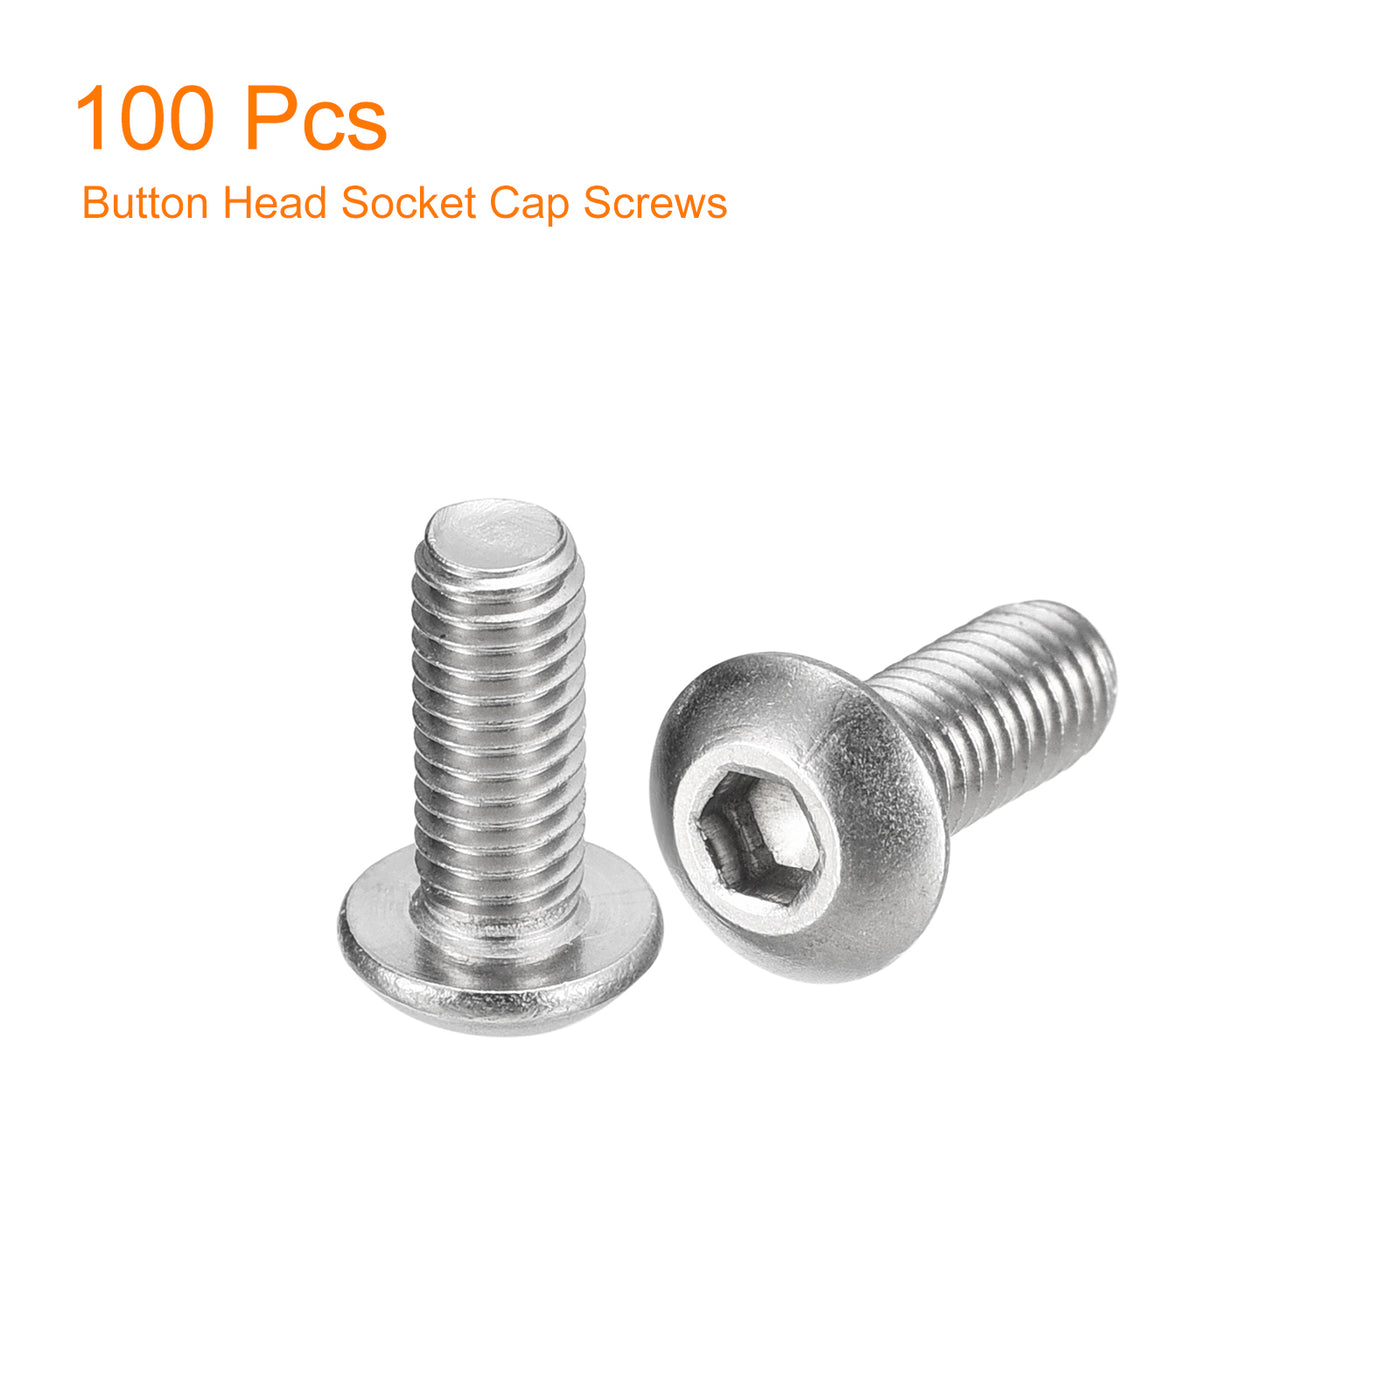 uxcell Uxcell #10-32x1/2" Button Head Socket Cap Screws, 100pcs 304 Stainless Steel Screws